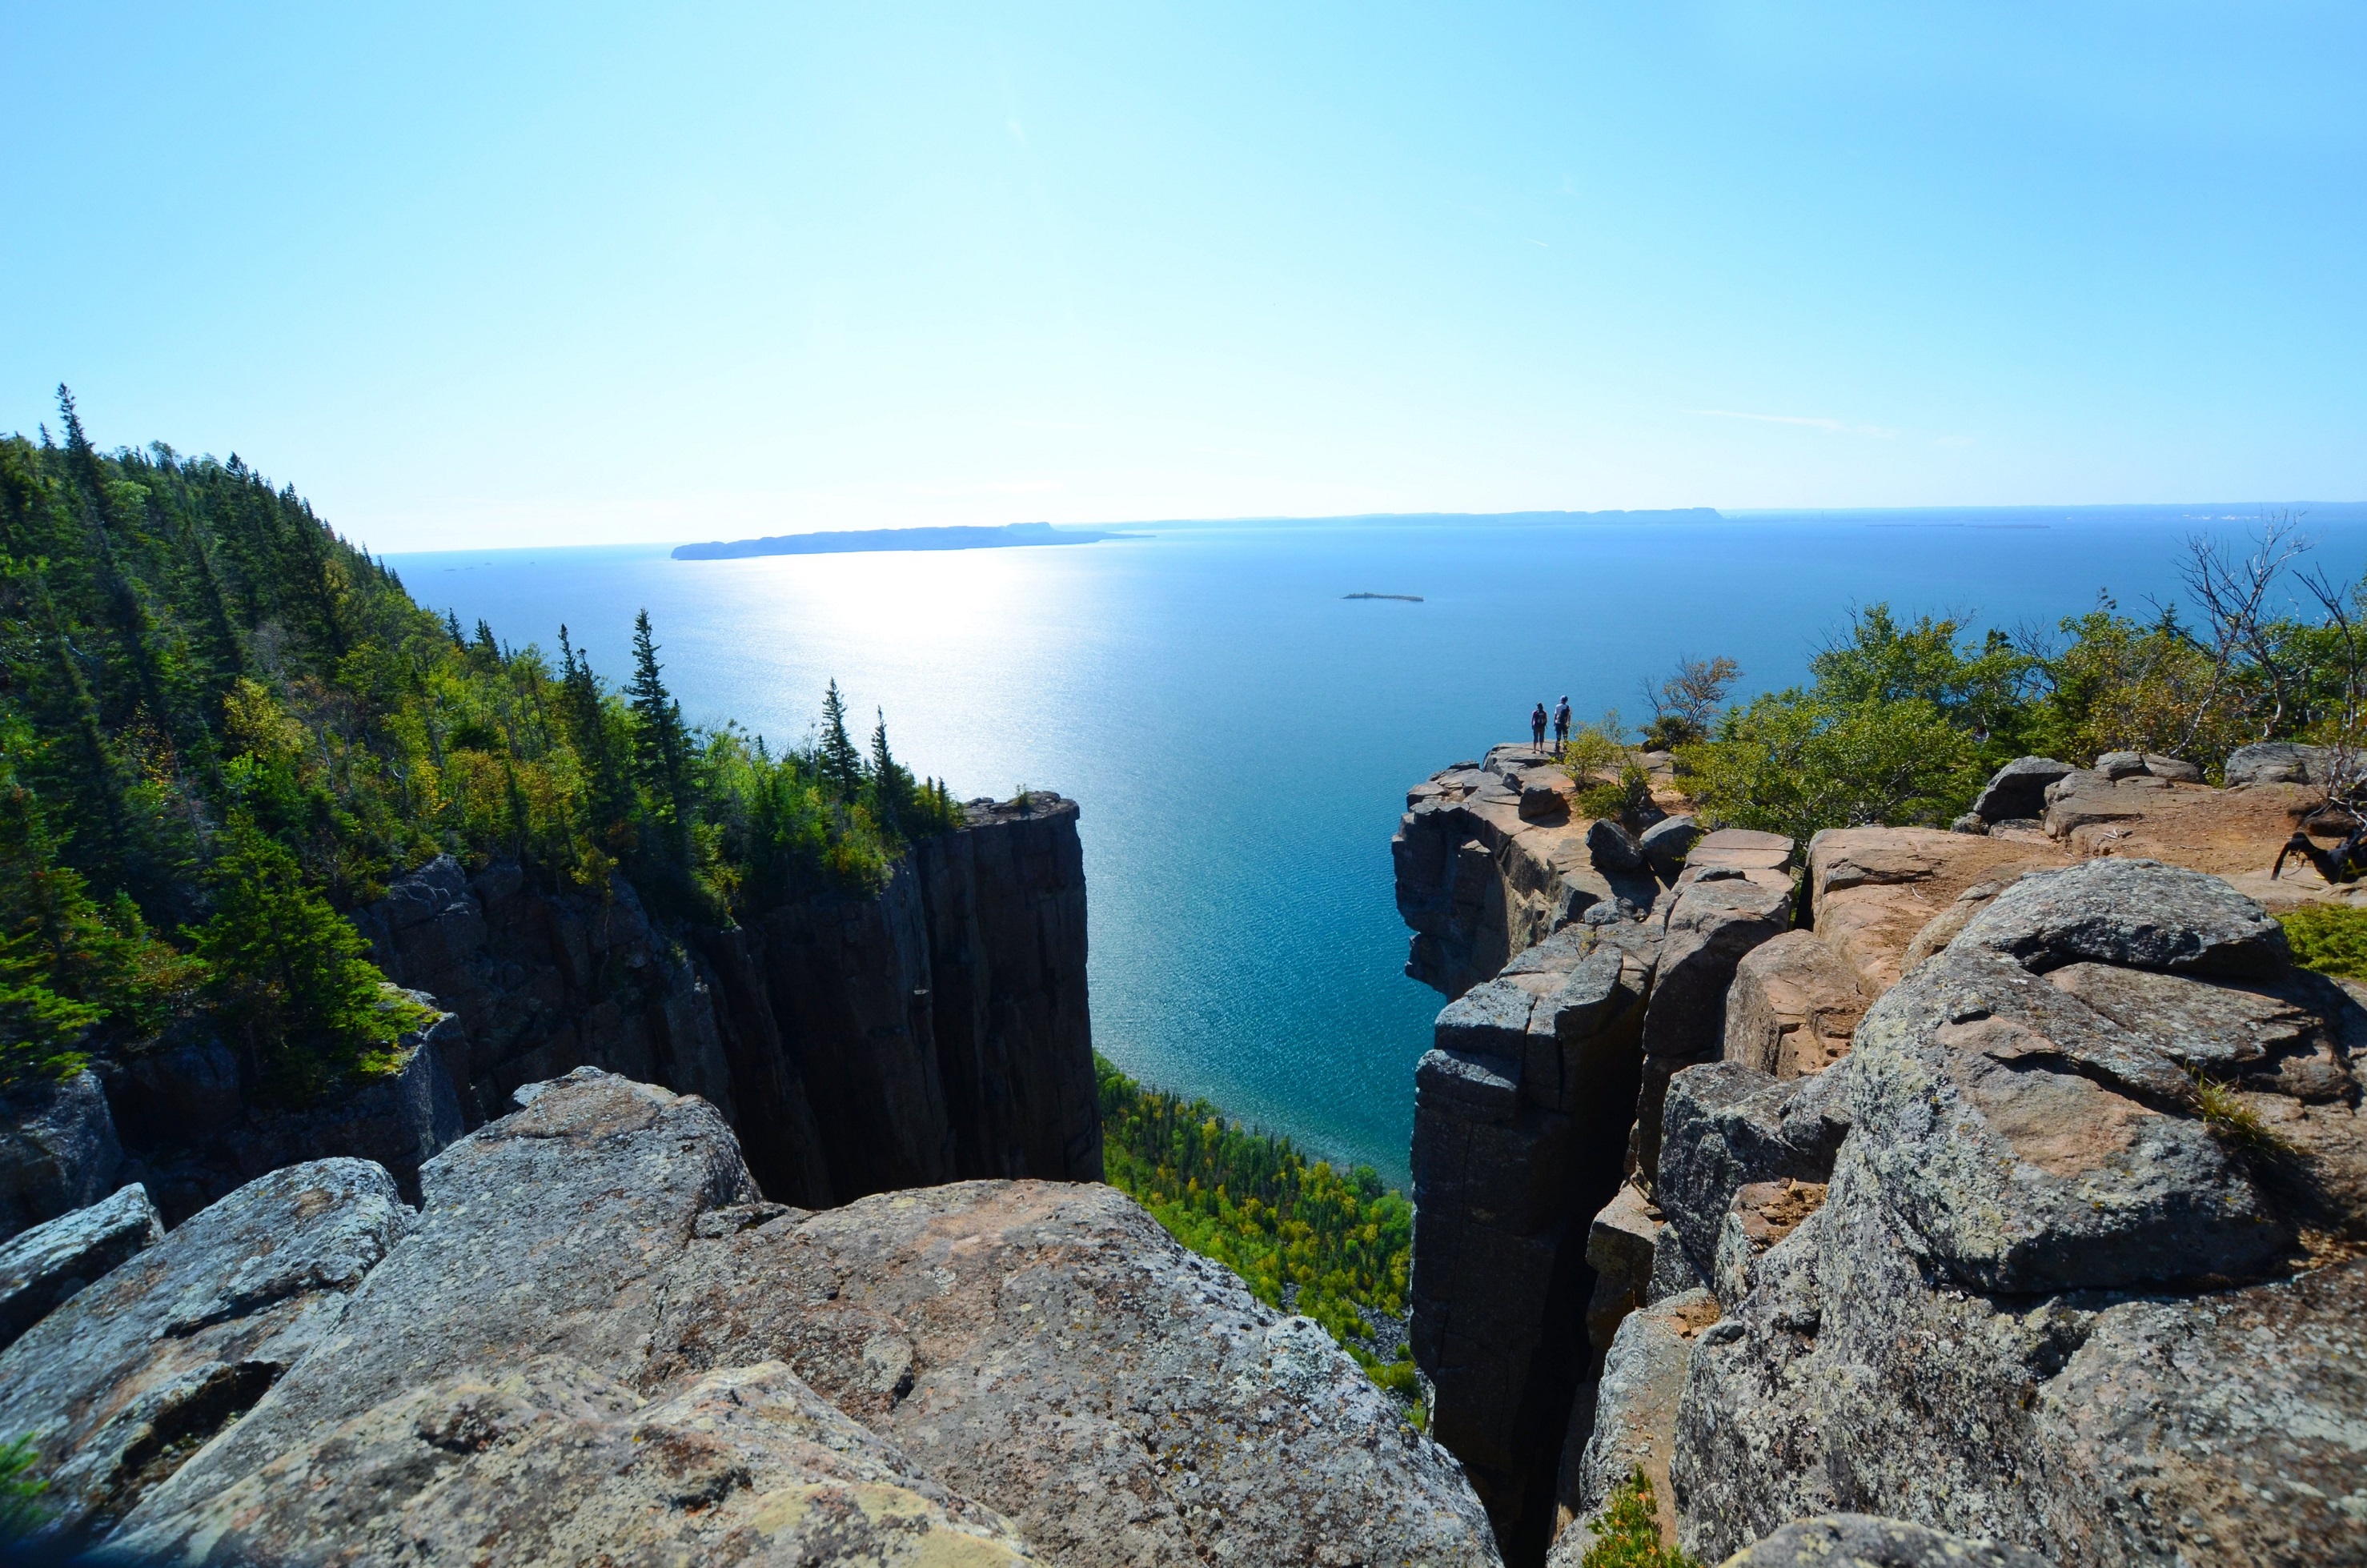 Район великих американских озер. Верхнее озеро (Lake Superior). Канада. Великие американские озёра верхнее Гурон Мичиган Эри Онтарио. Великие озёра Северной Америки озероонтарио. Озеро Супериор.